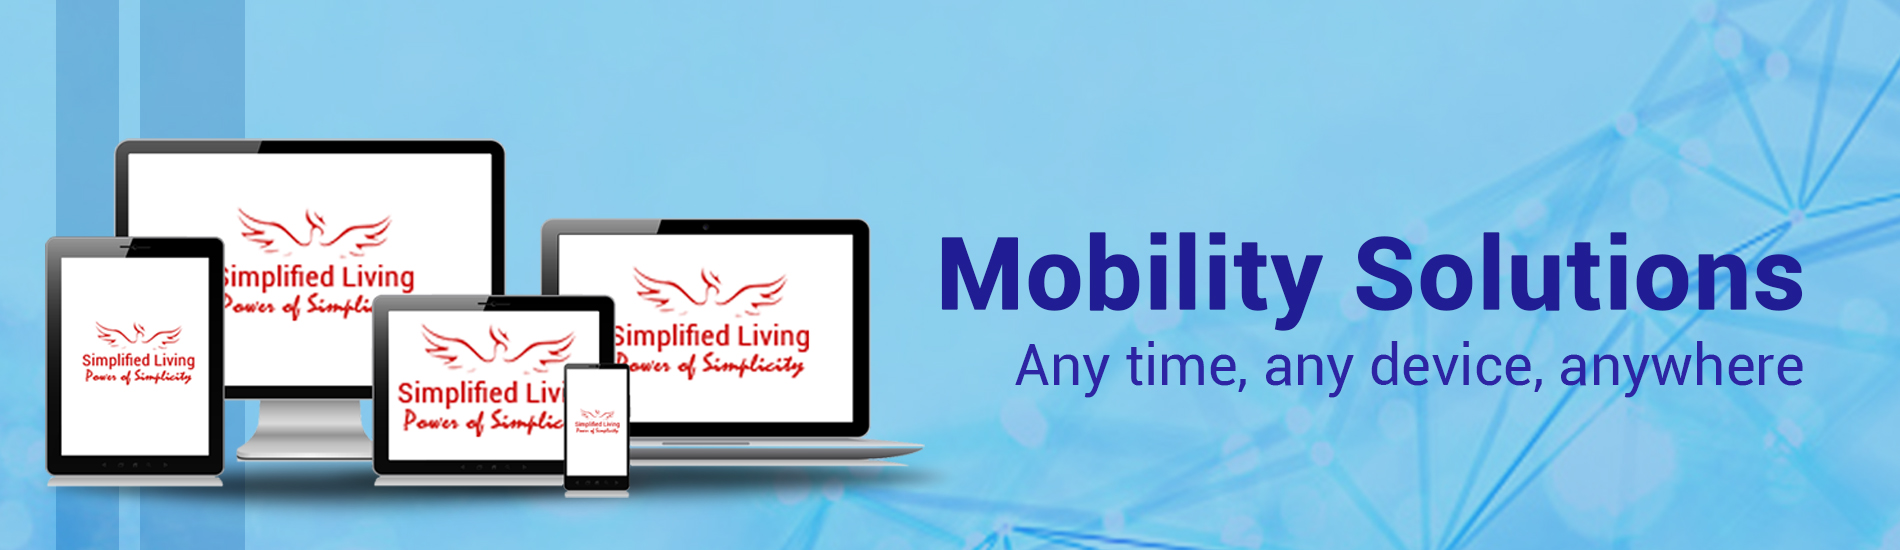 Mobile Application Development service